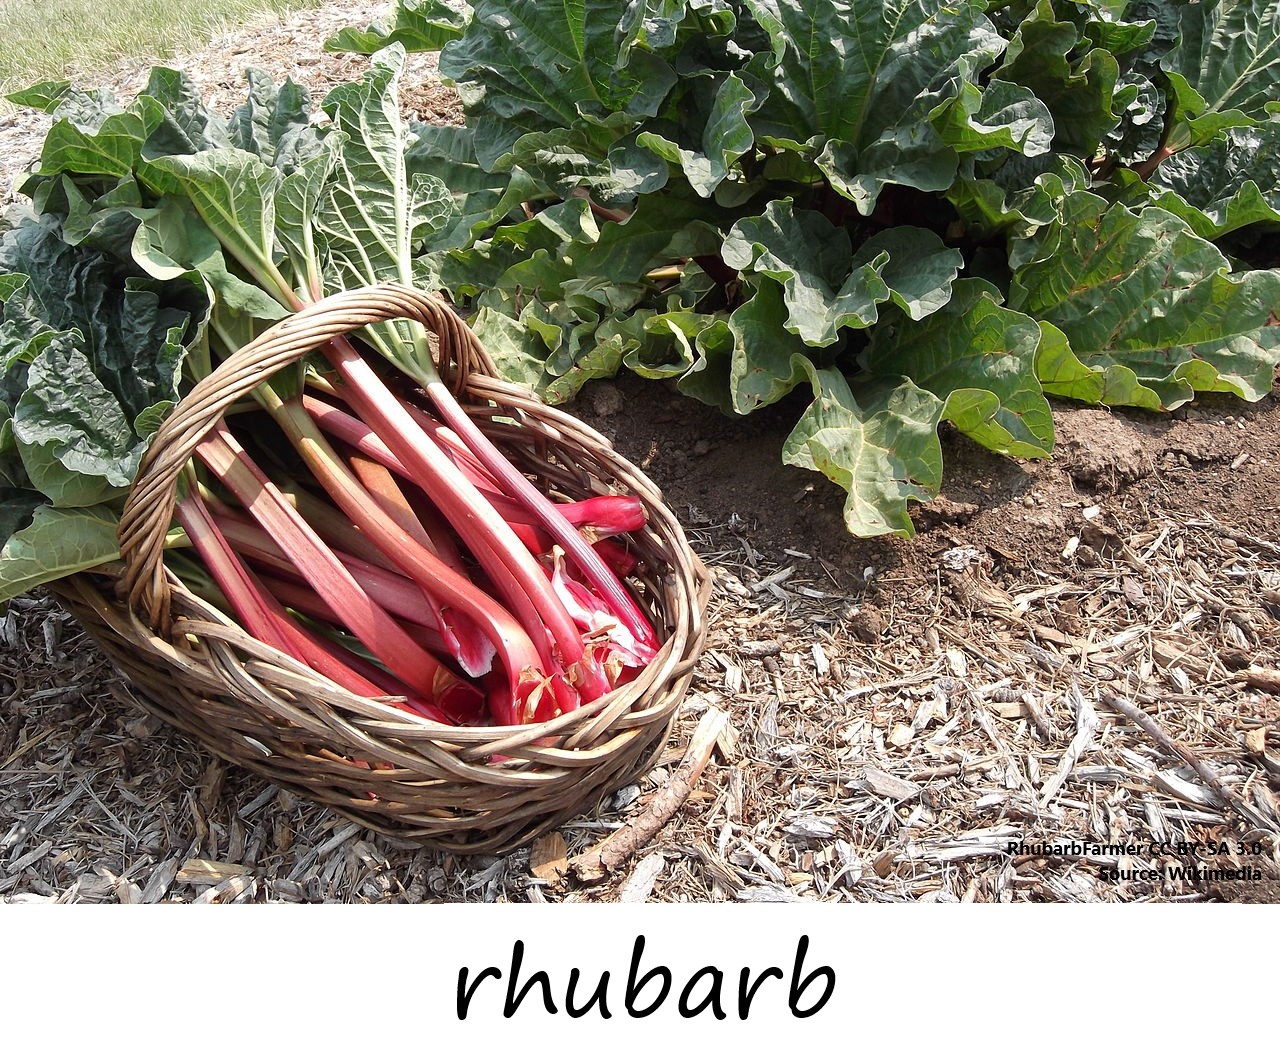 Rhubarb photo labelled